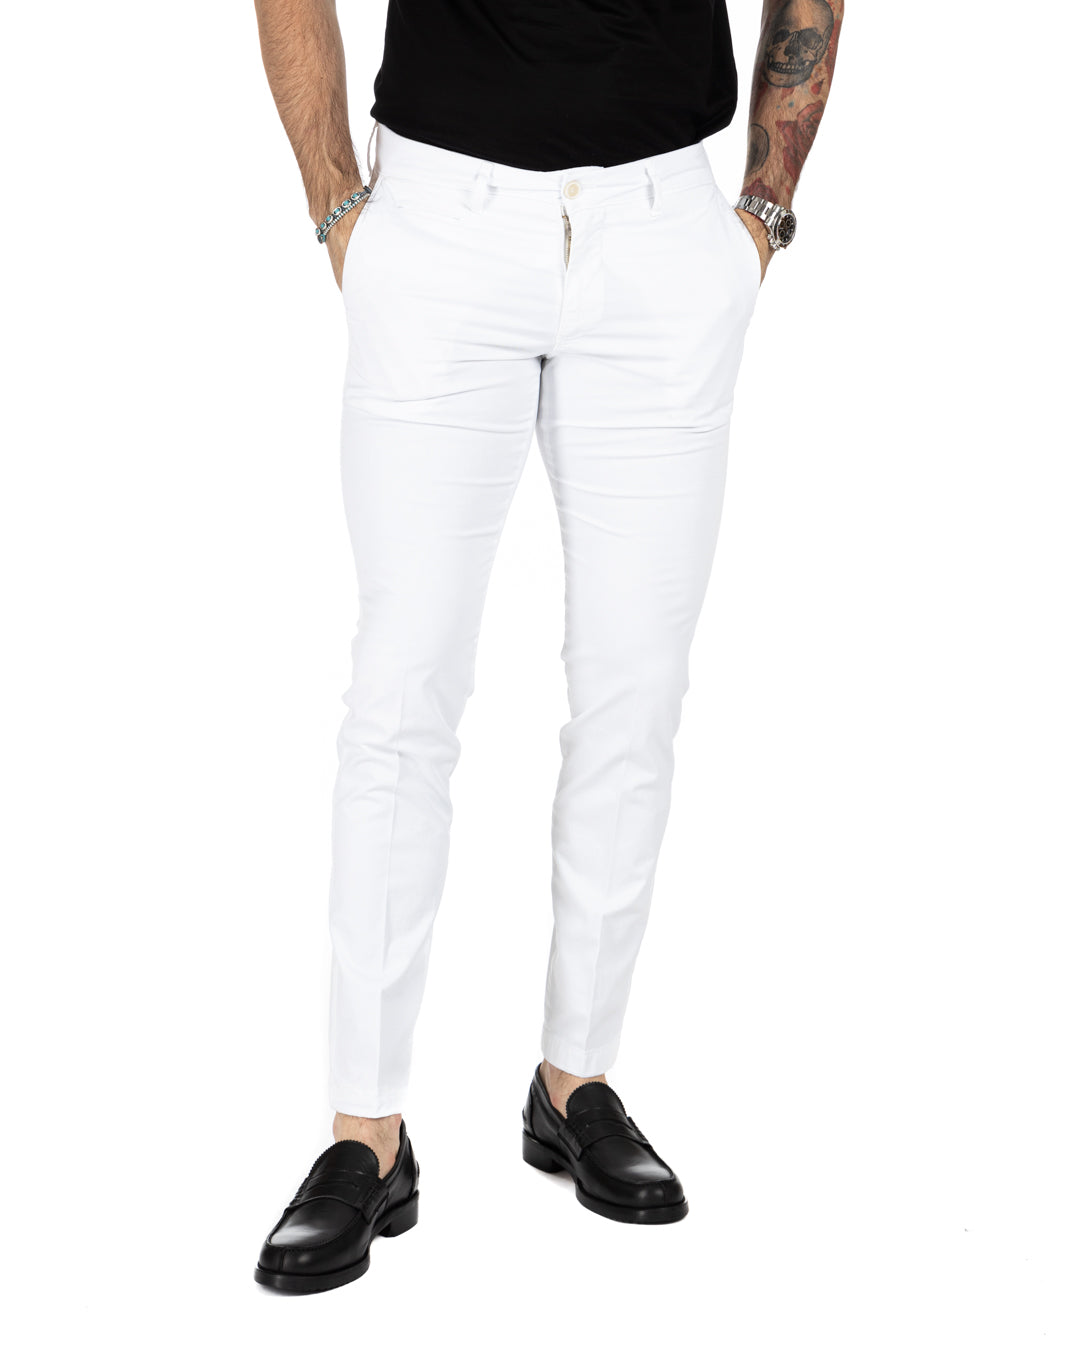 Frank - pantalon blanc basique